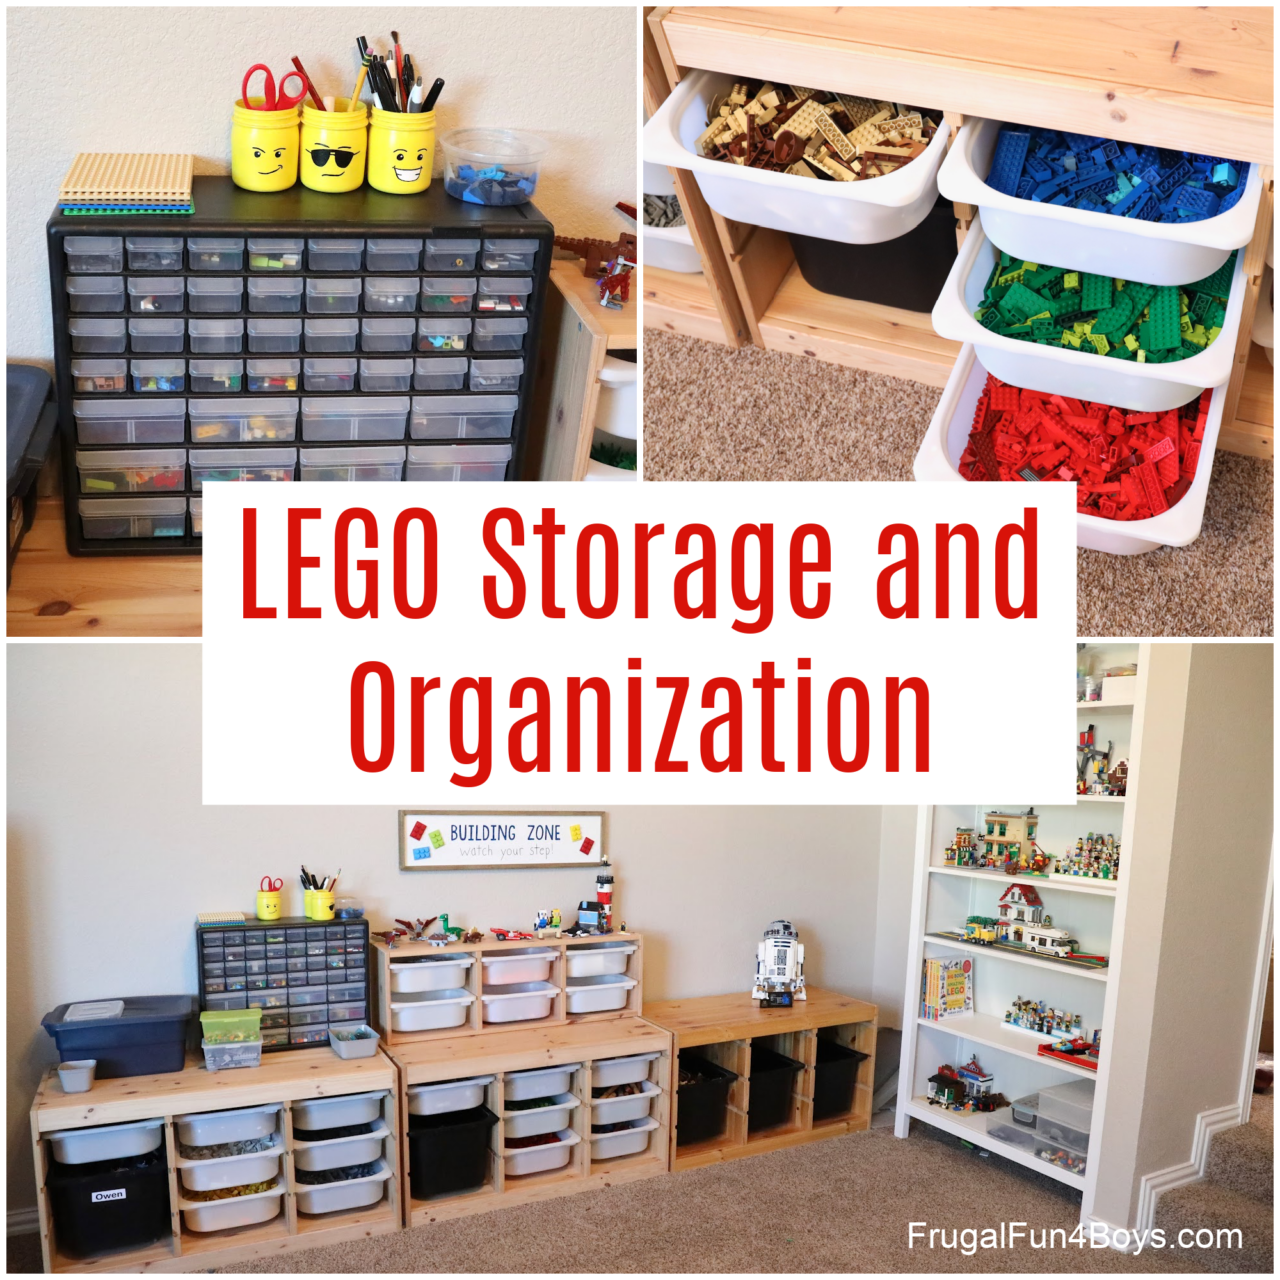 Dorm Room Food Storage Ideas: 13 Easy Ways to Organize